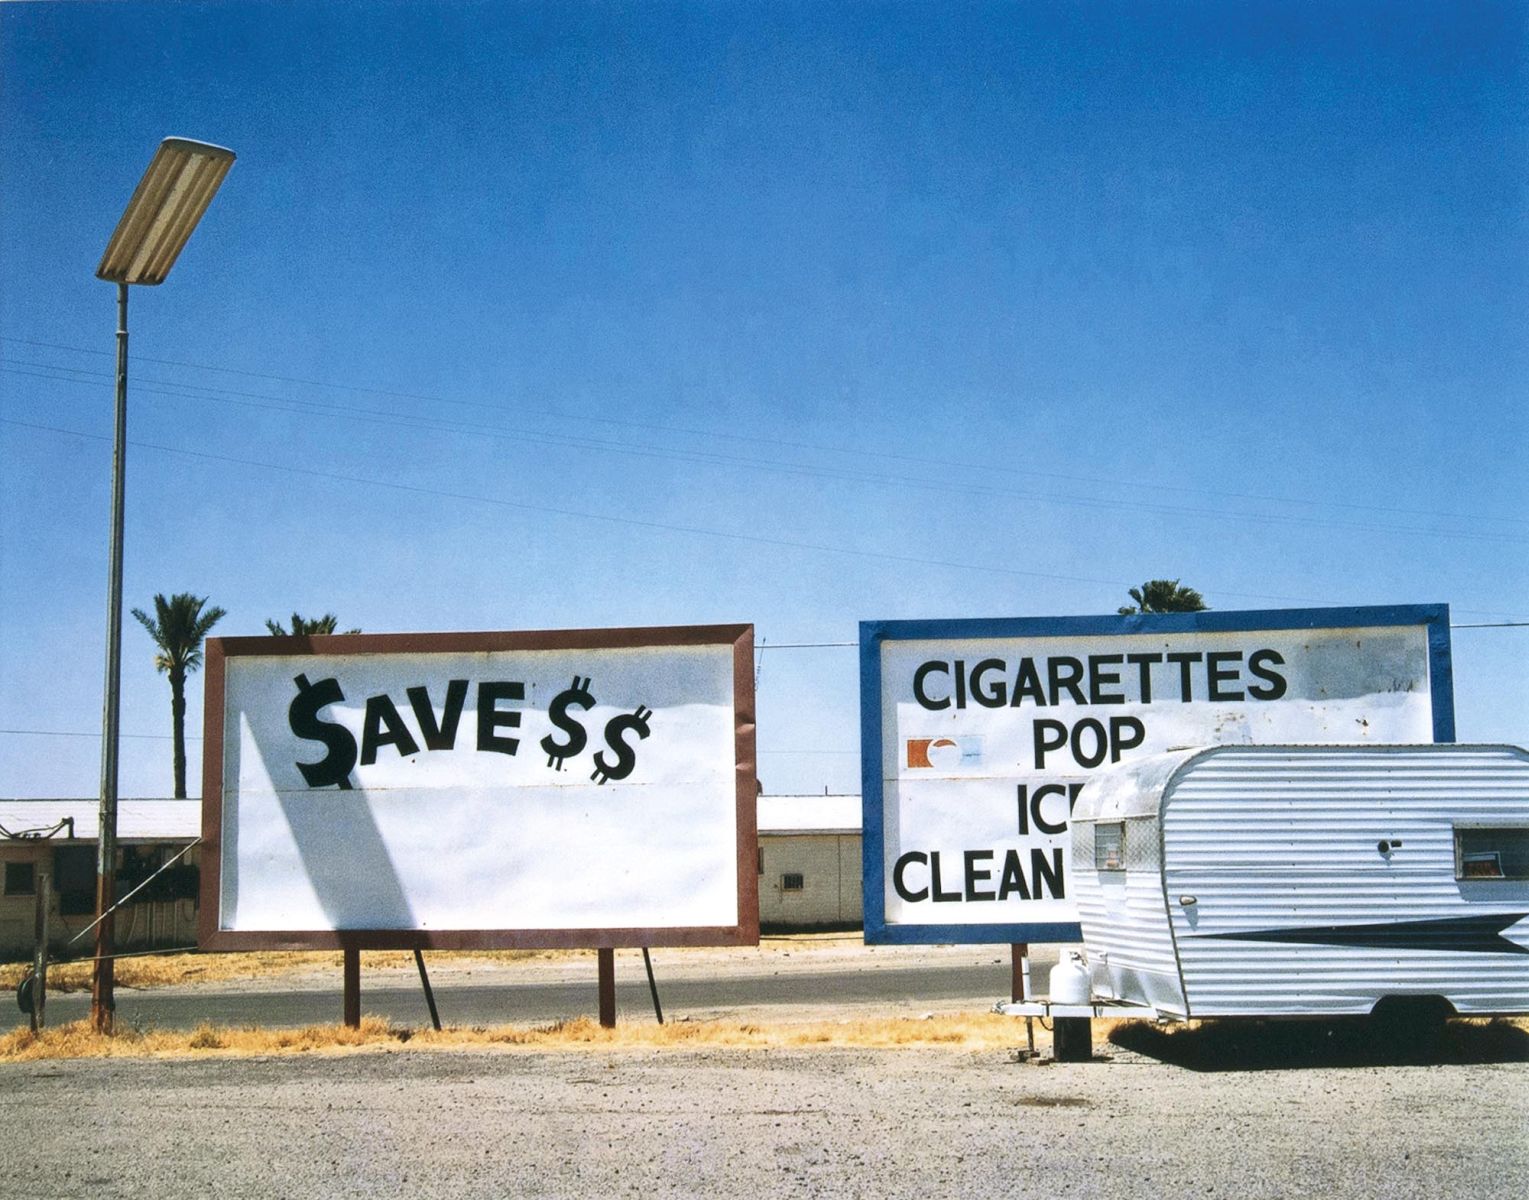 Save Dollars, Gila Bend, Arizona